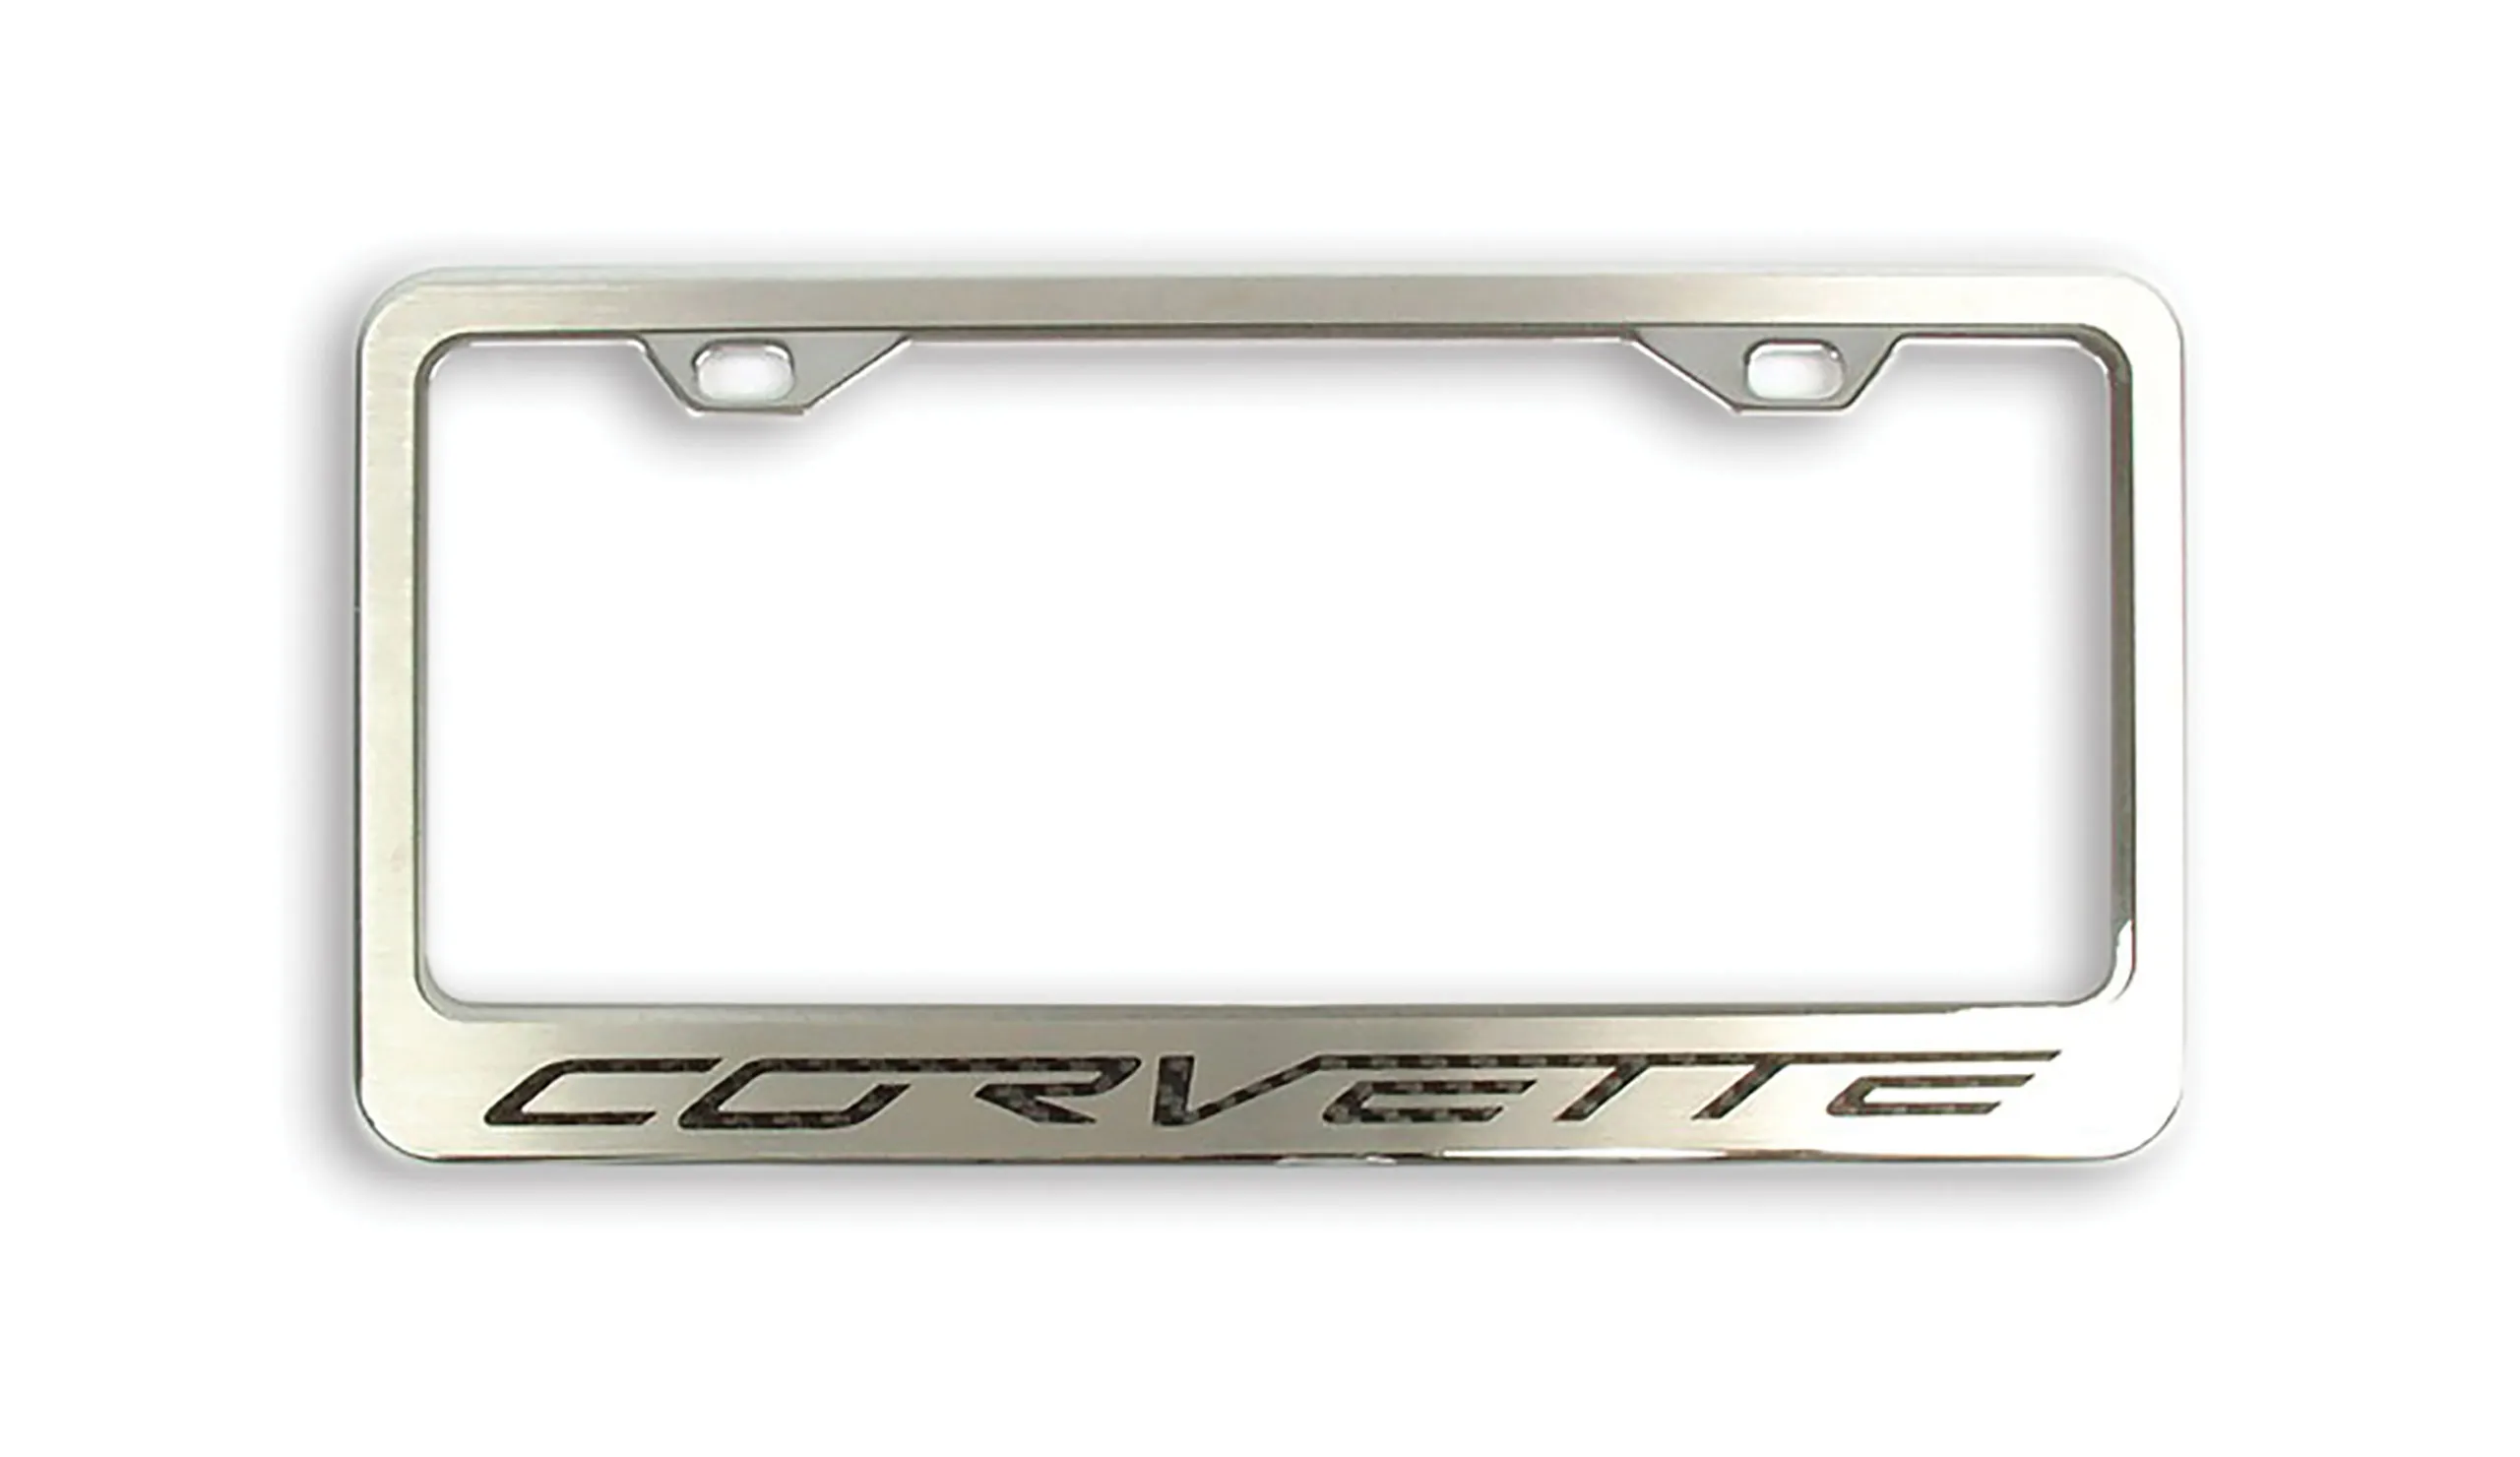 C6 2005-2013 Chevrolet Polished Rear Tag Frame W/Corvette Logo - Choose Color - American Car Craft